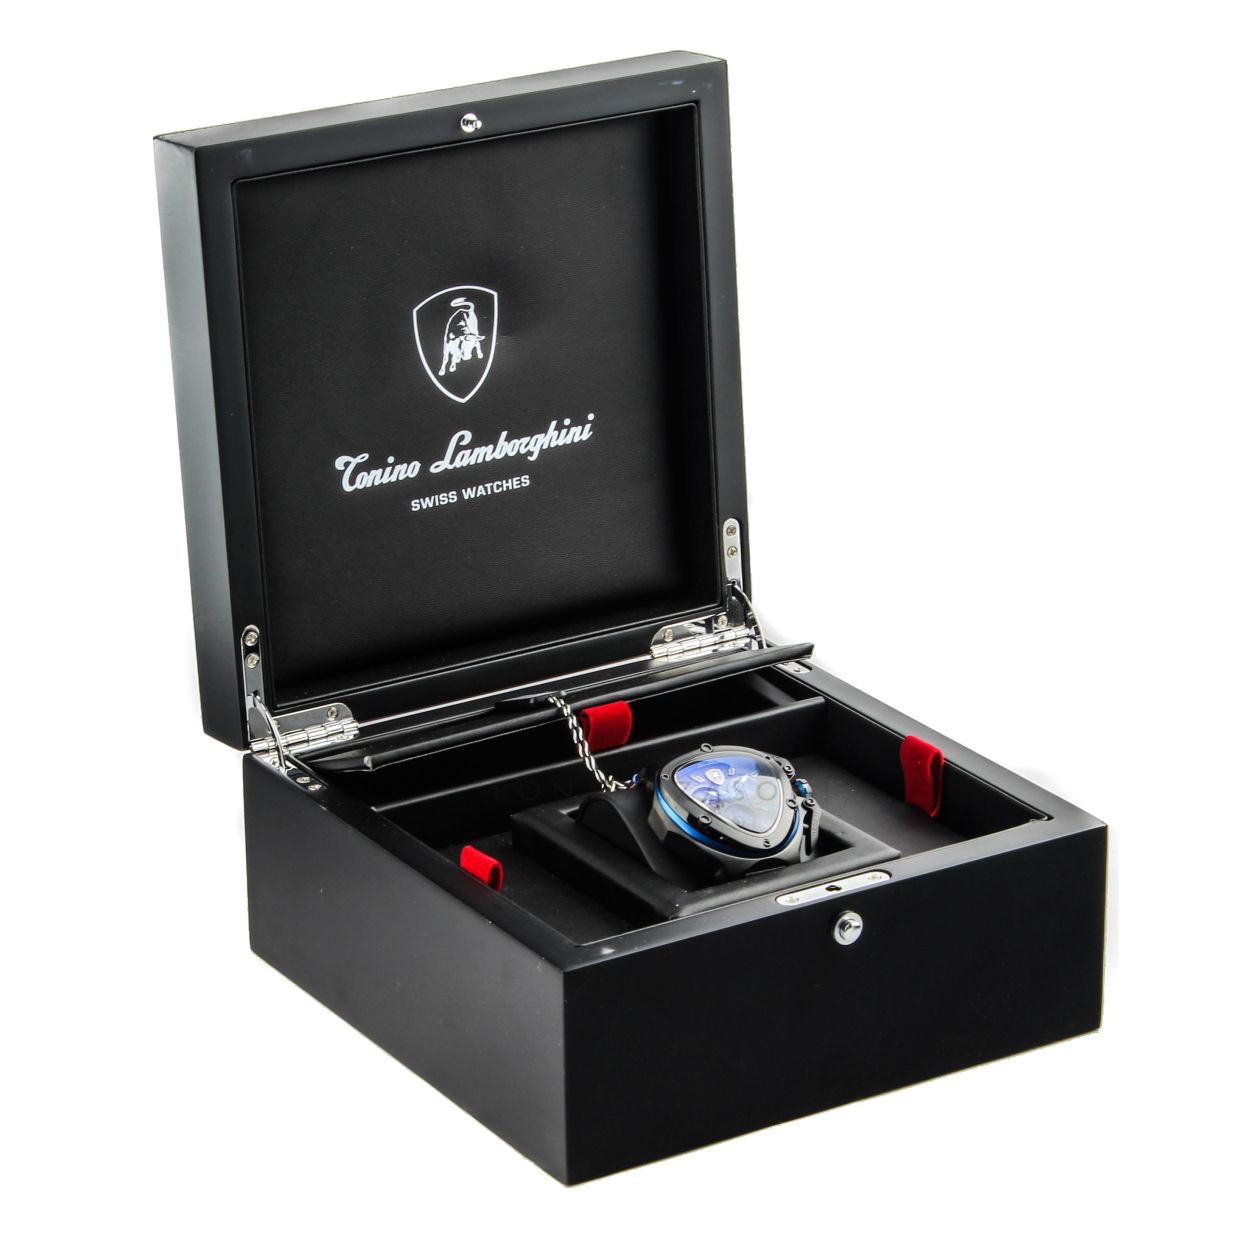 Zegarek męski Tonino Lamborghini T9XD-RG Spyder + Dodatkowy pasek